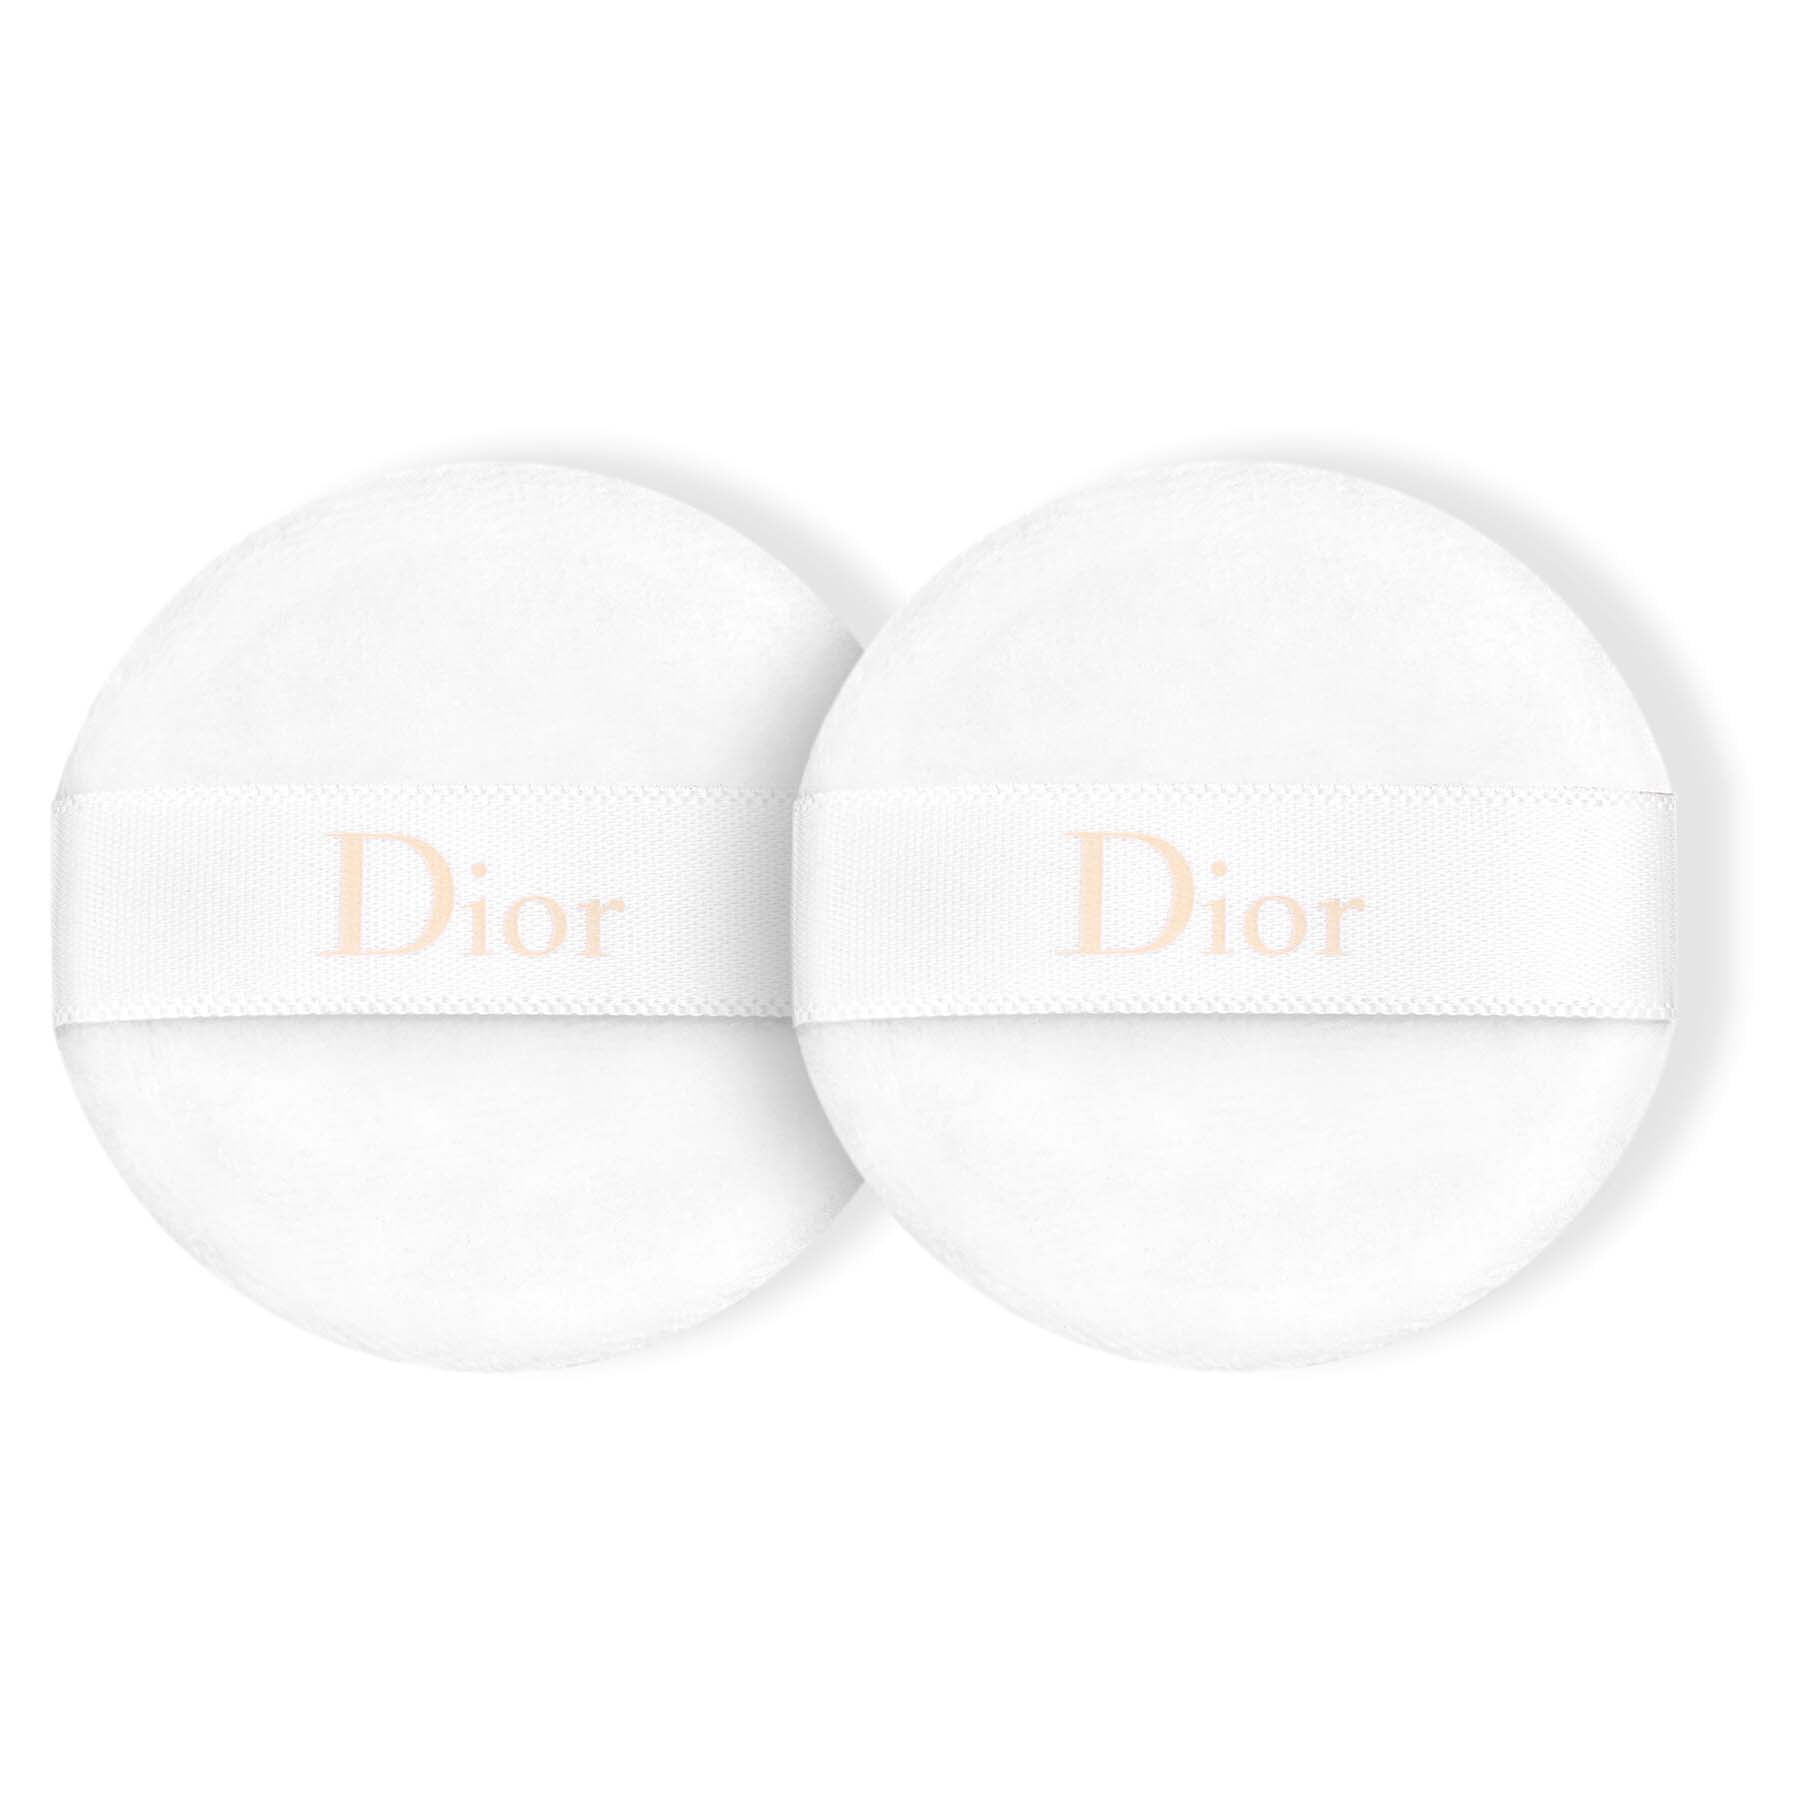 Dior Diorskin Forever Cushion Loose Powder Puff Applicators X 2  David  Jones